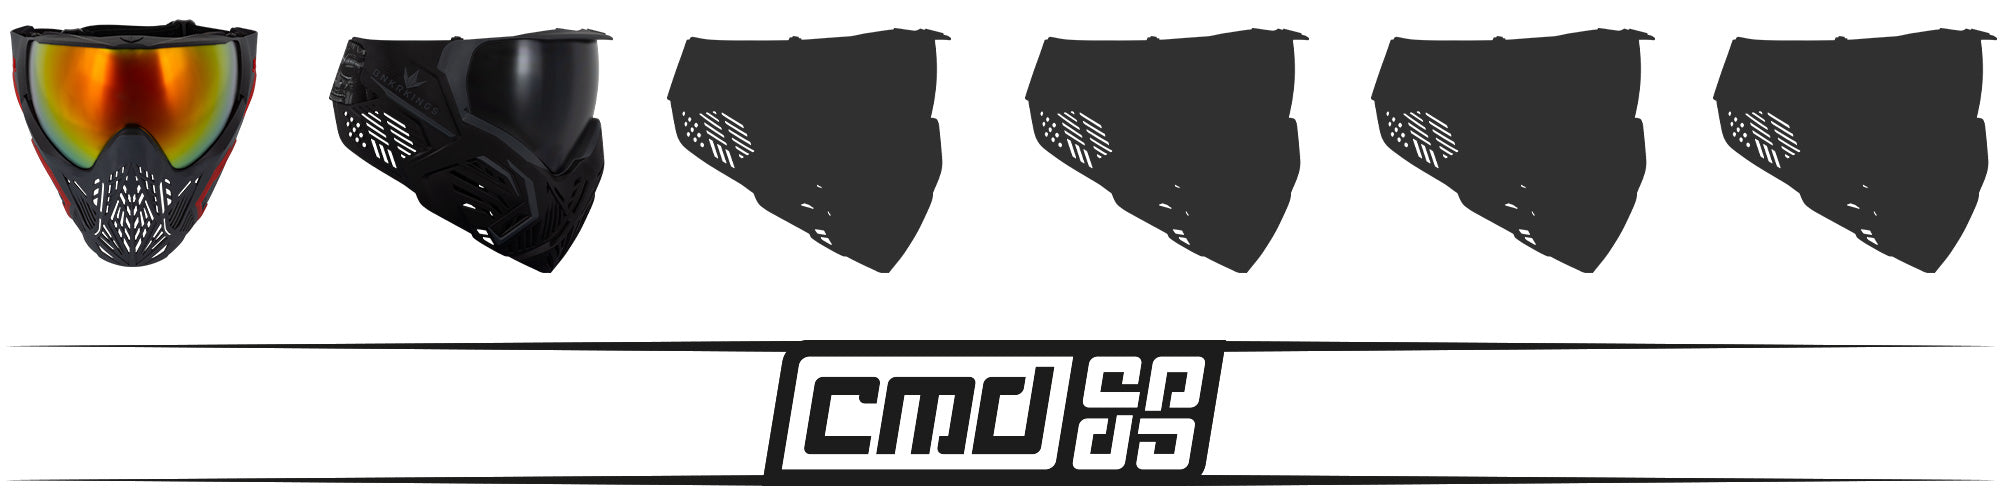 CMD Goggle - Header Image